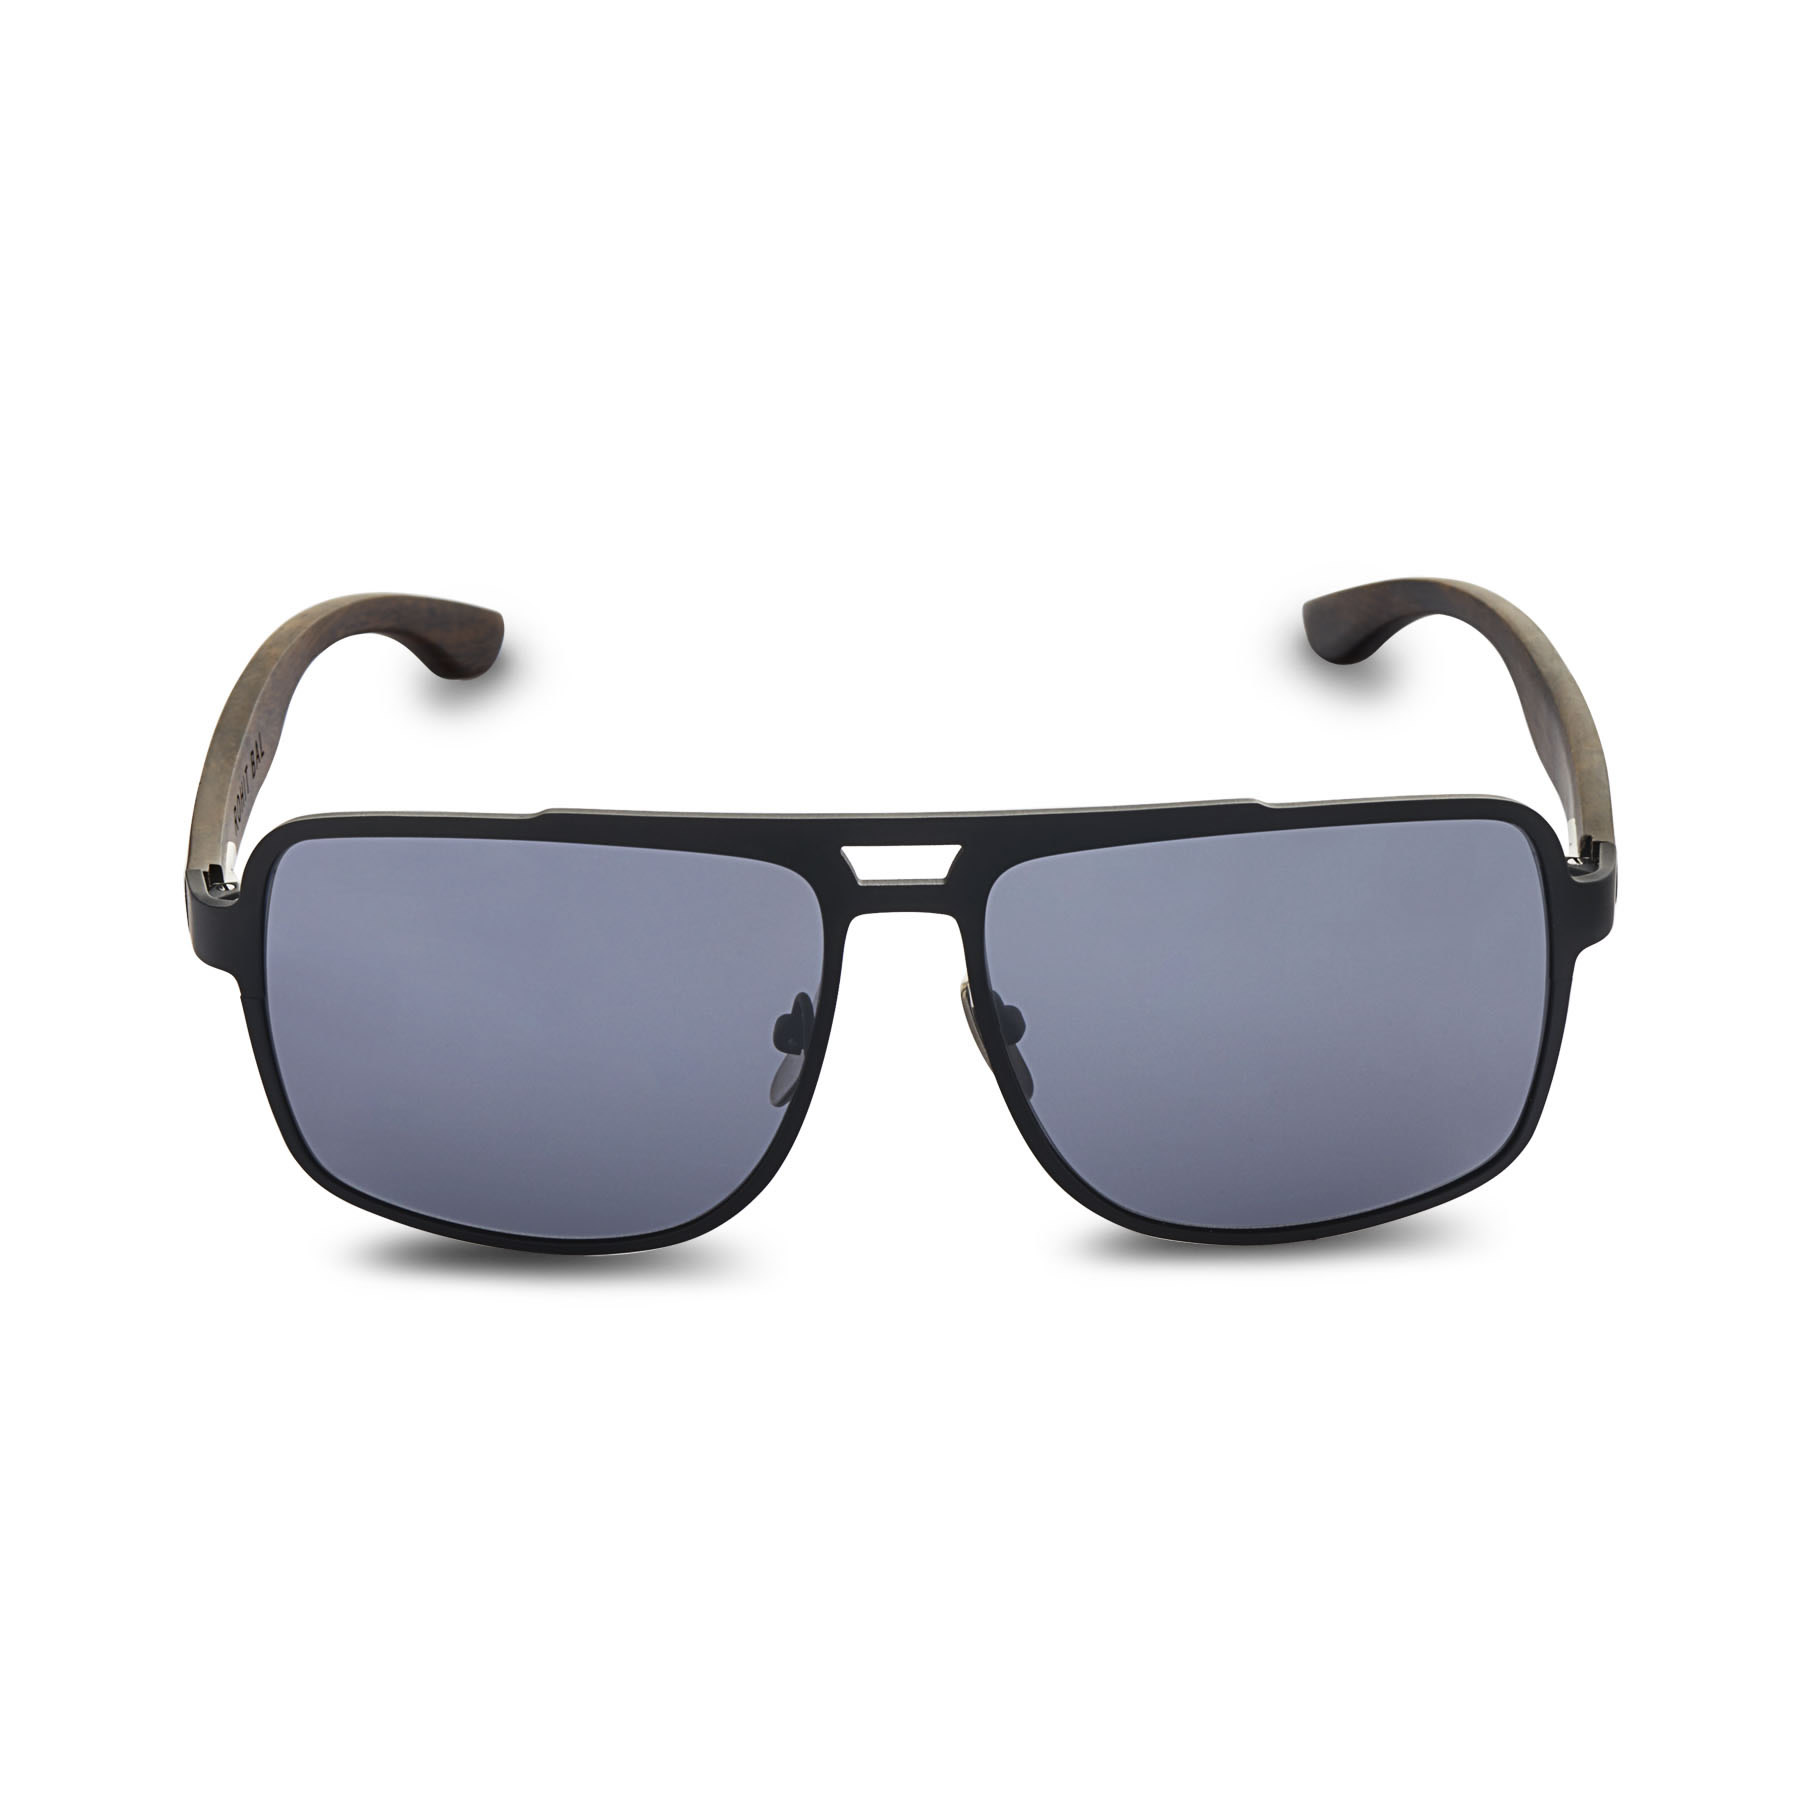 Rohit Bal Double Bridge Sunglasses for Men